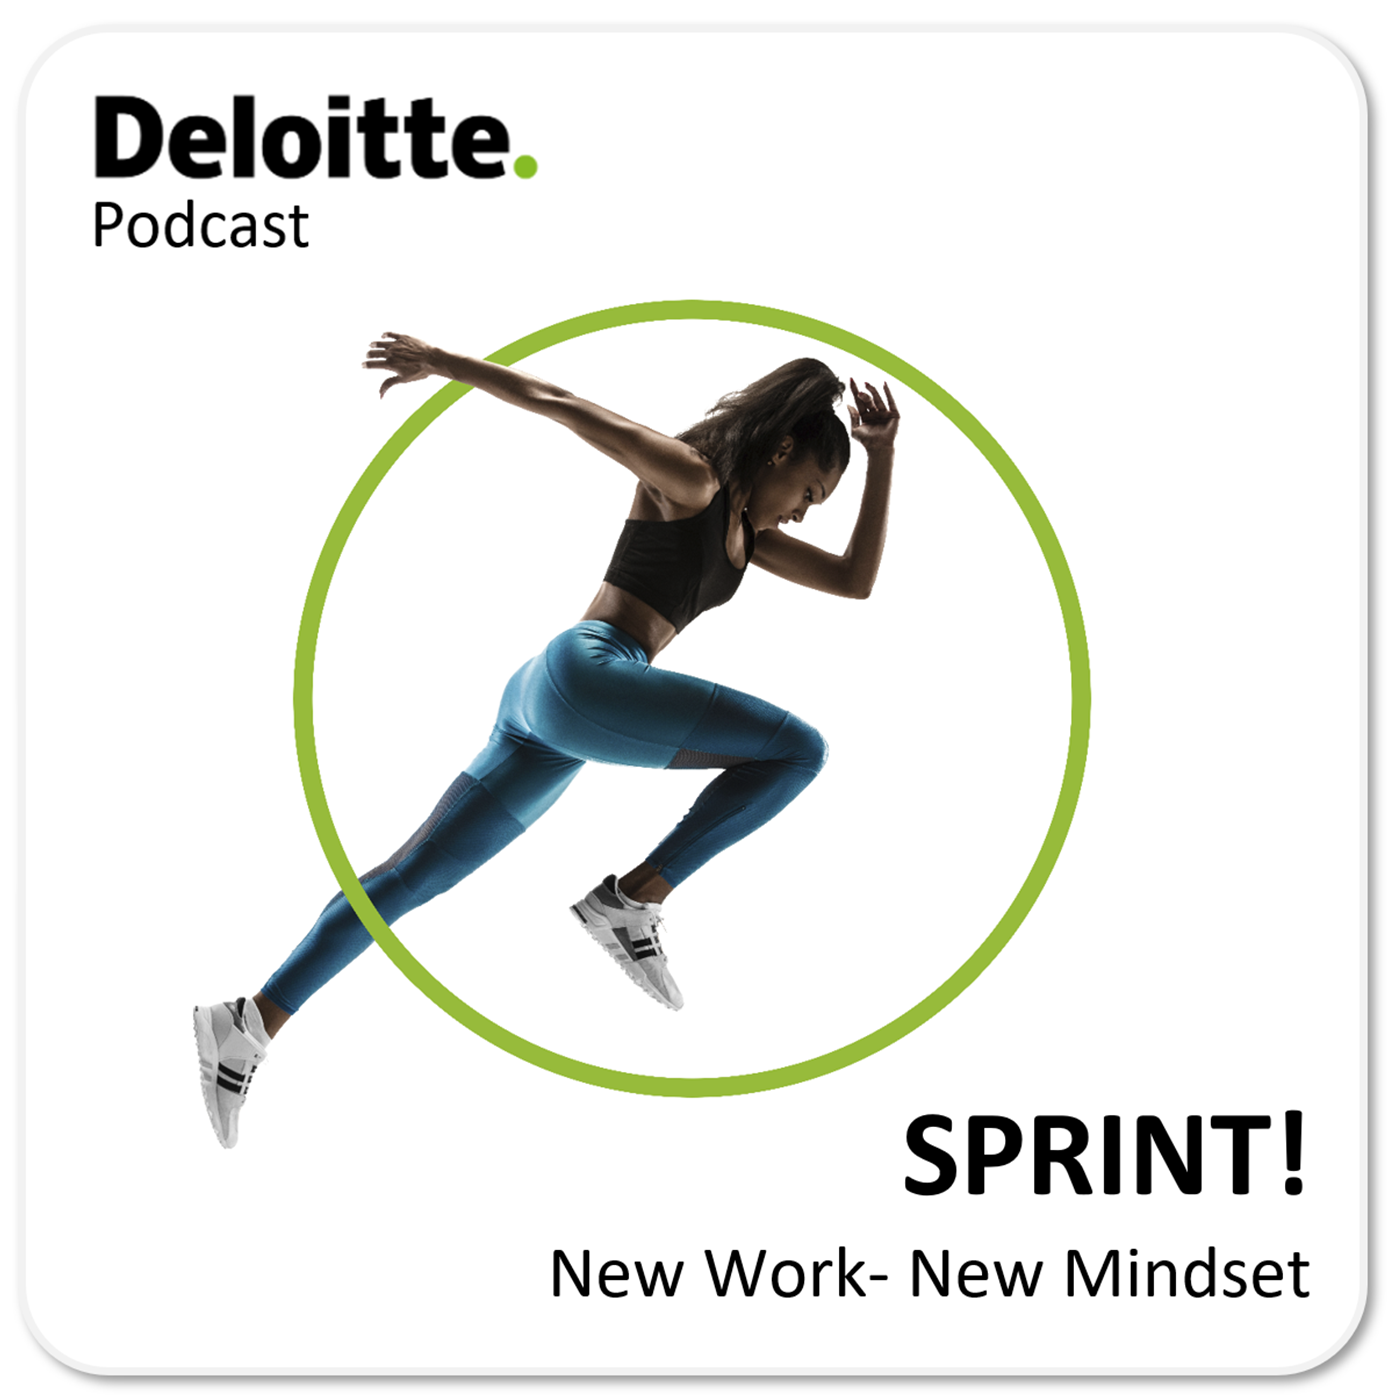 Sprint: New Work - New Mindset